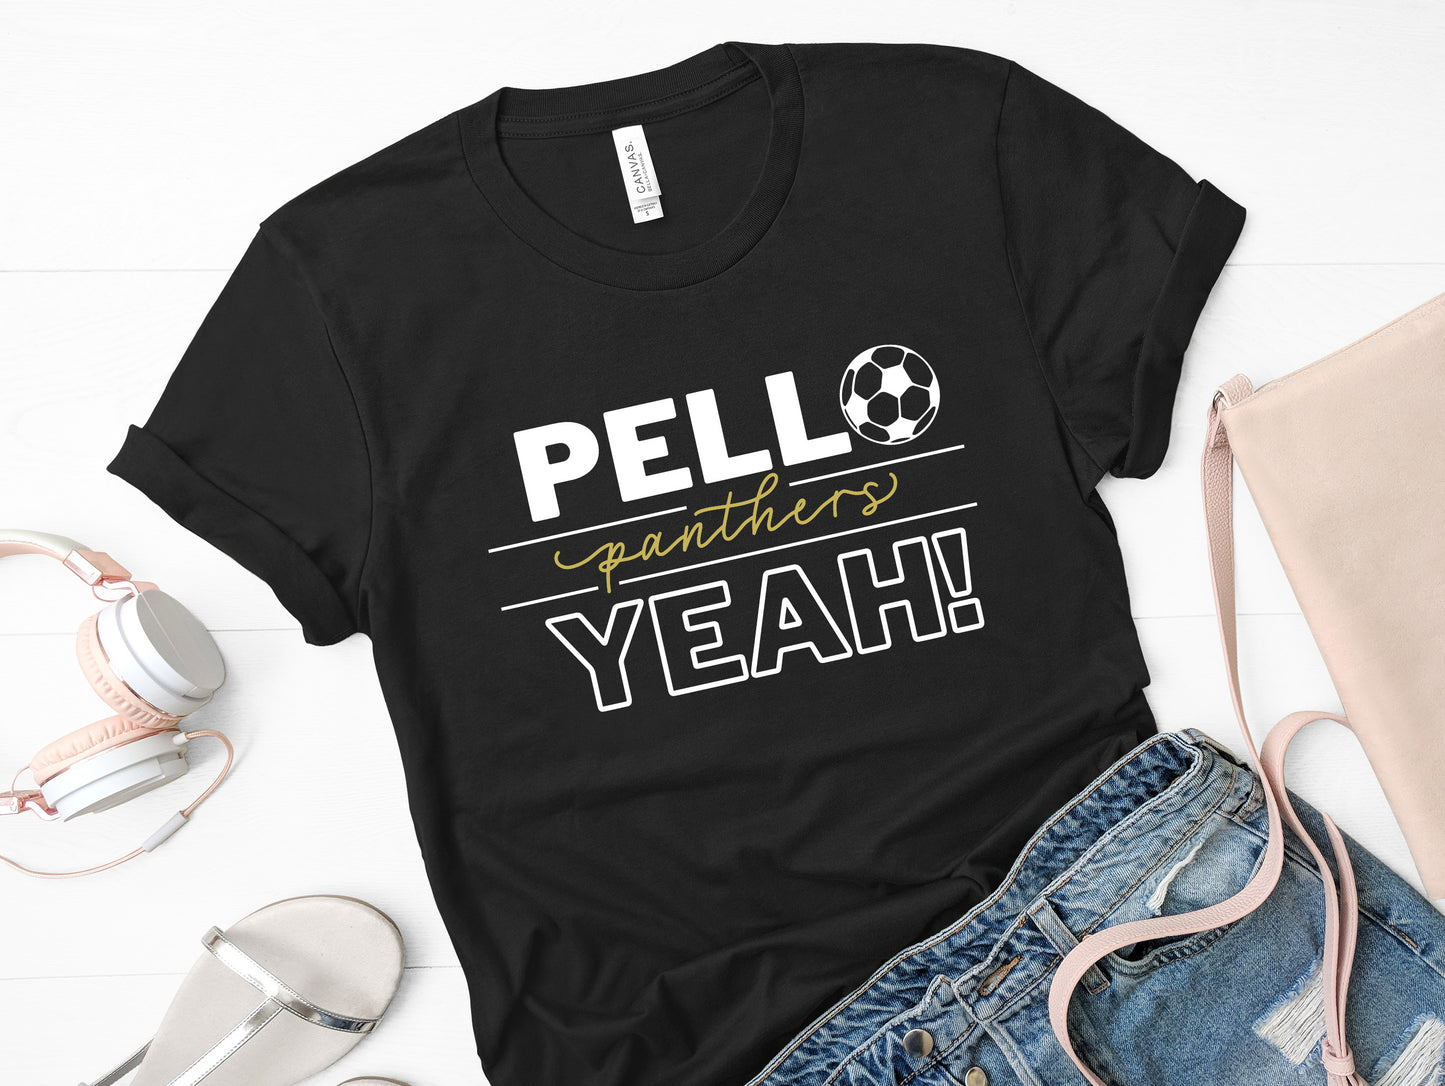 Pell Yeah Panthers - T-Shirt (Black)